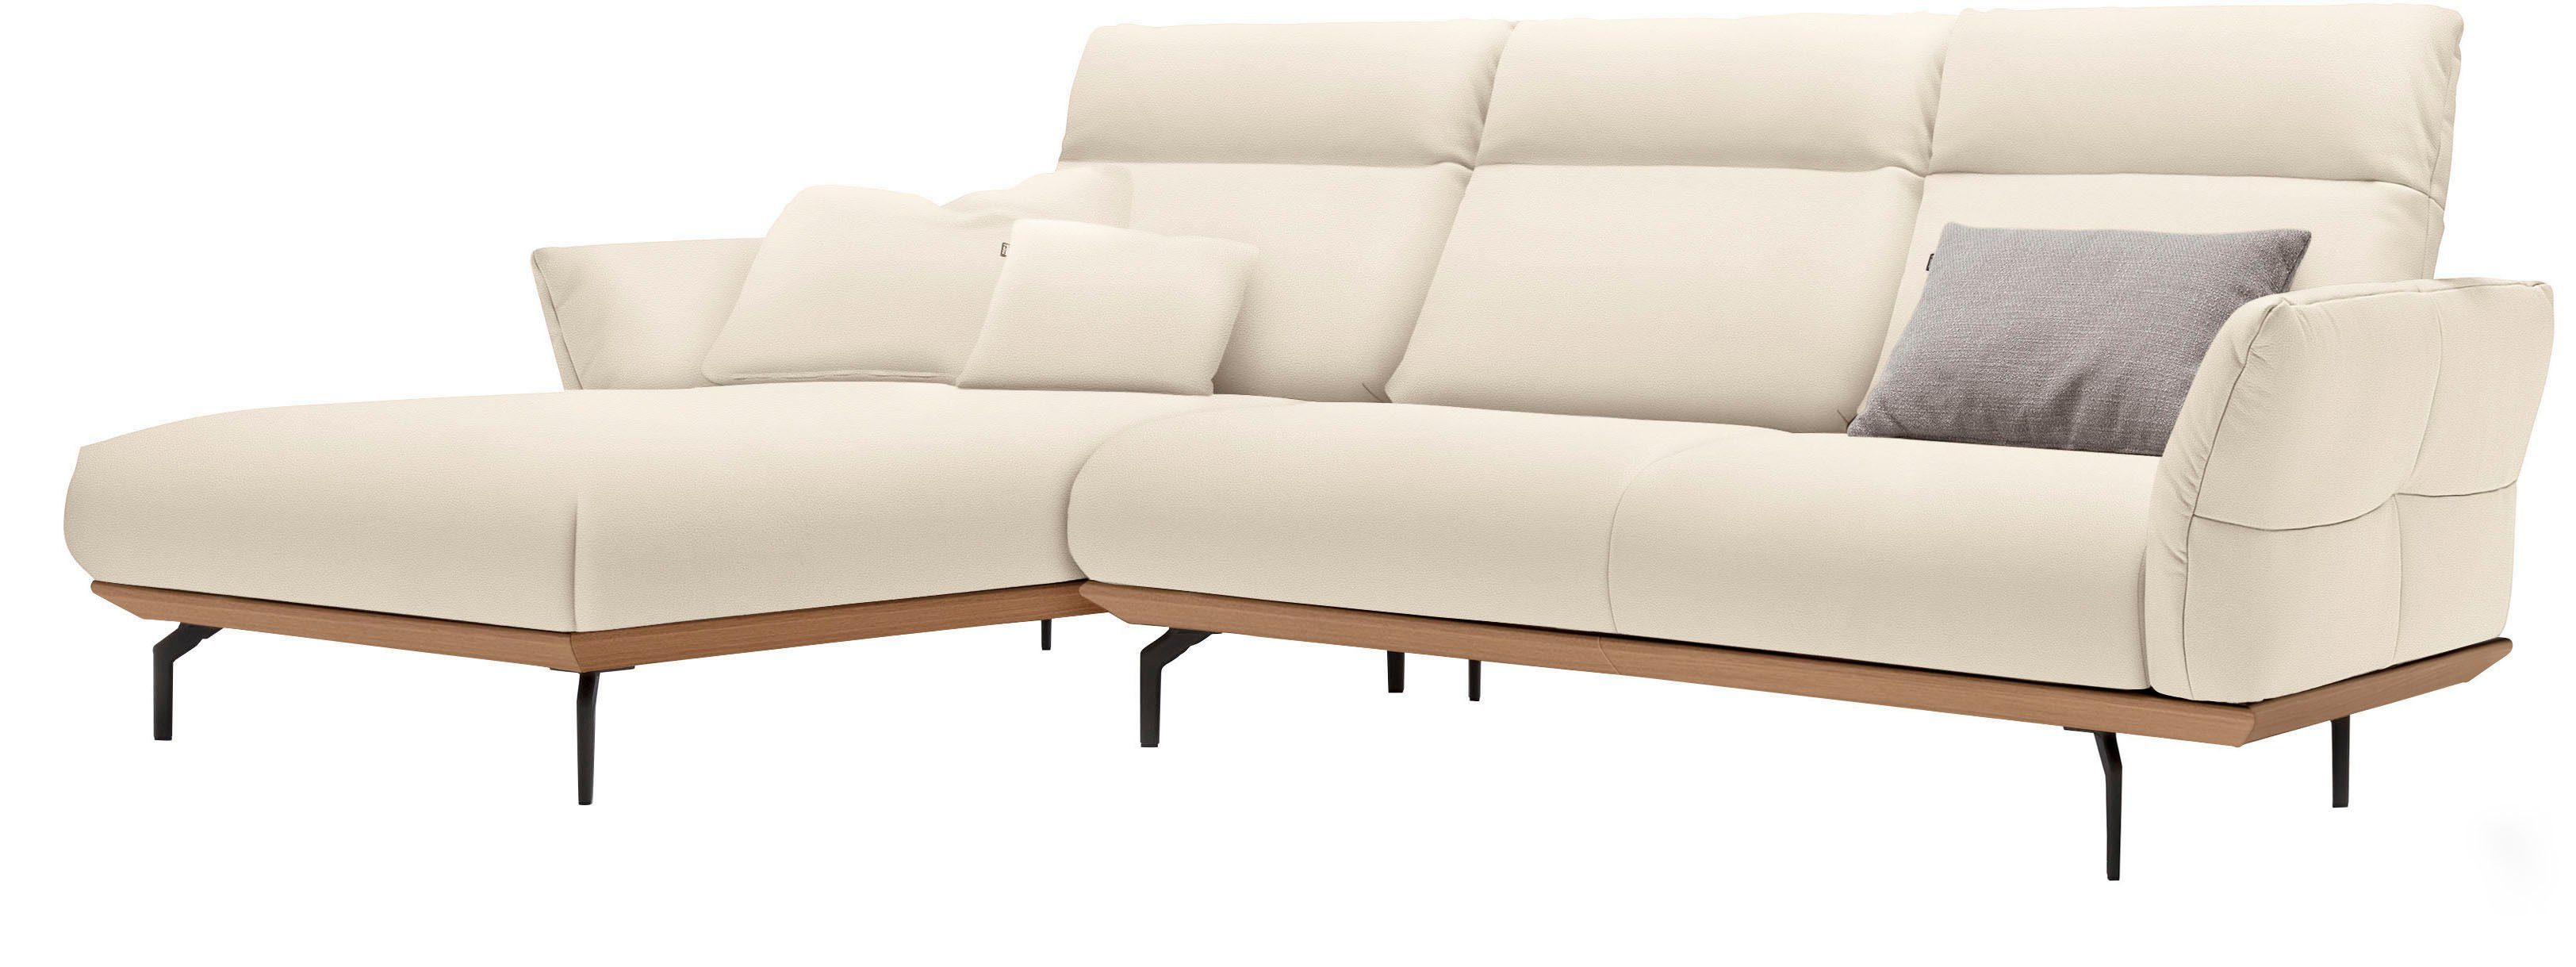 sofa 298 in Sockel Breite umbragrau, in hs.460, Eiche, cm Ecksofa Alugussfüße hülsta